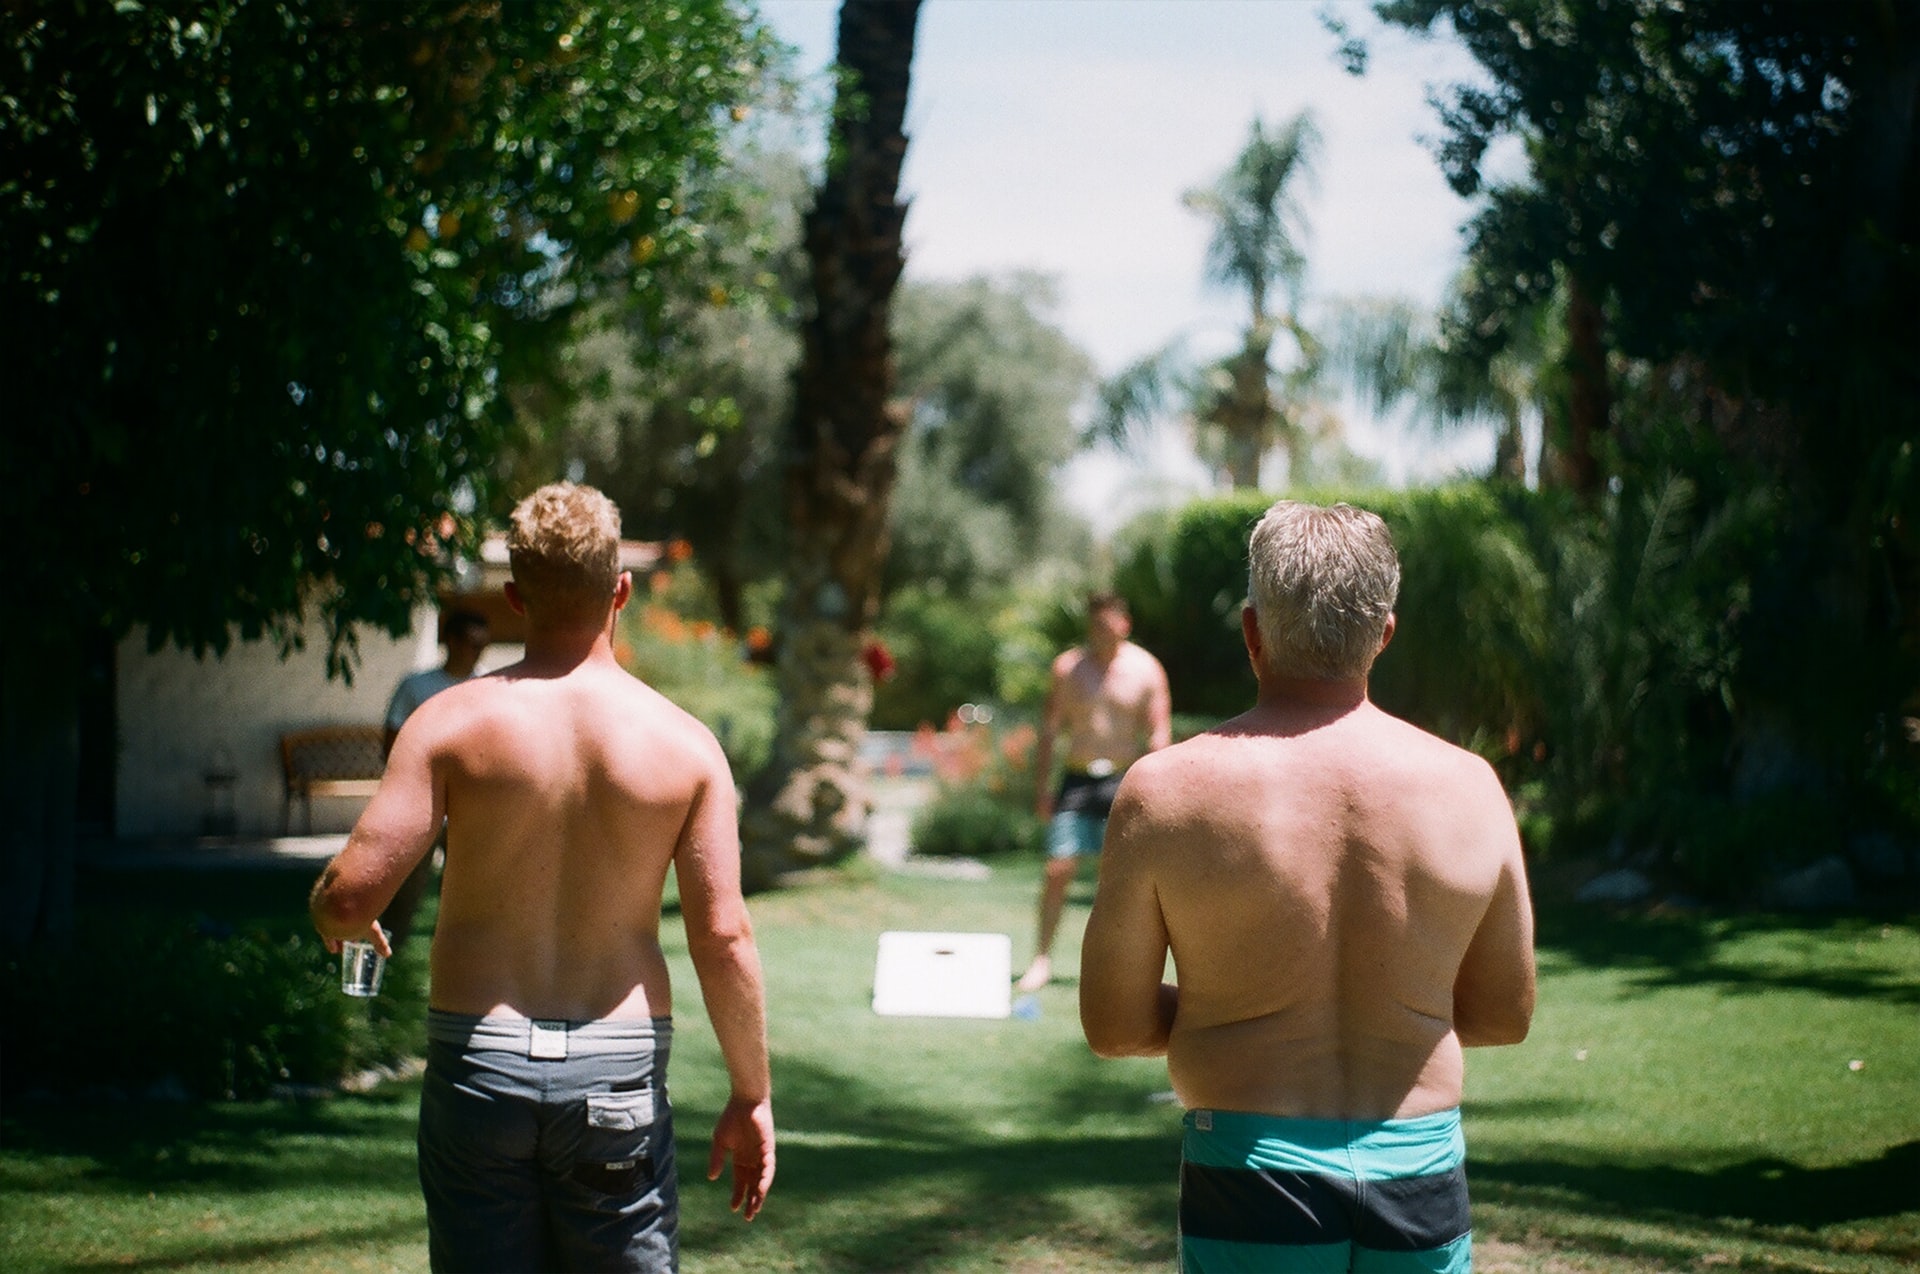 backs of shirtless men in a sunny garden